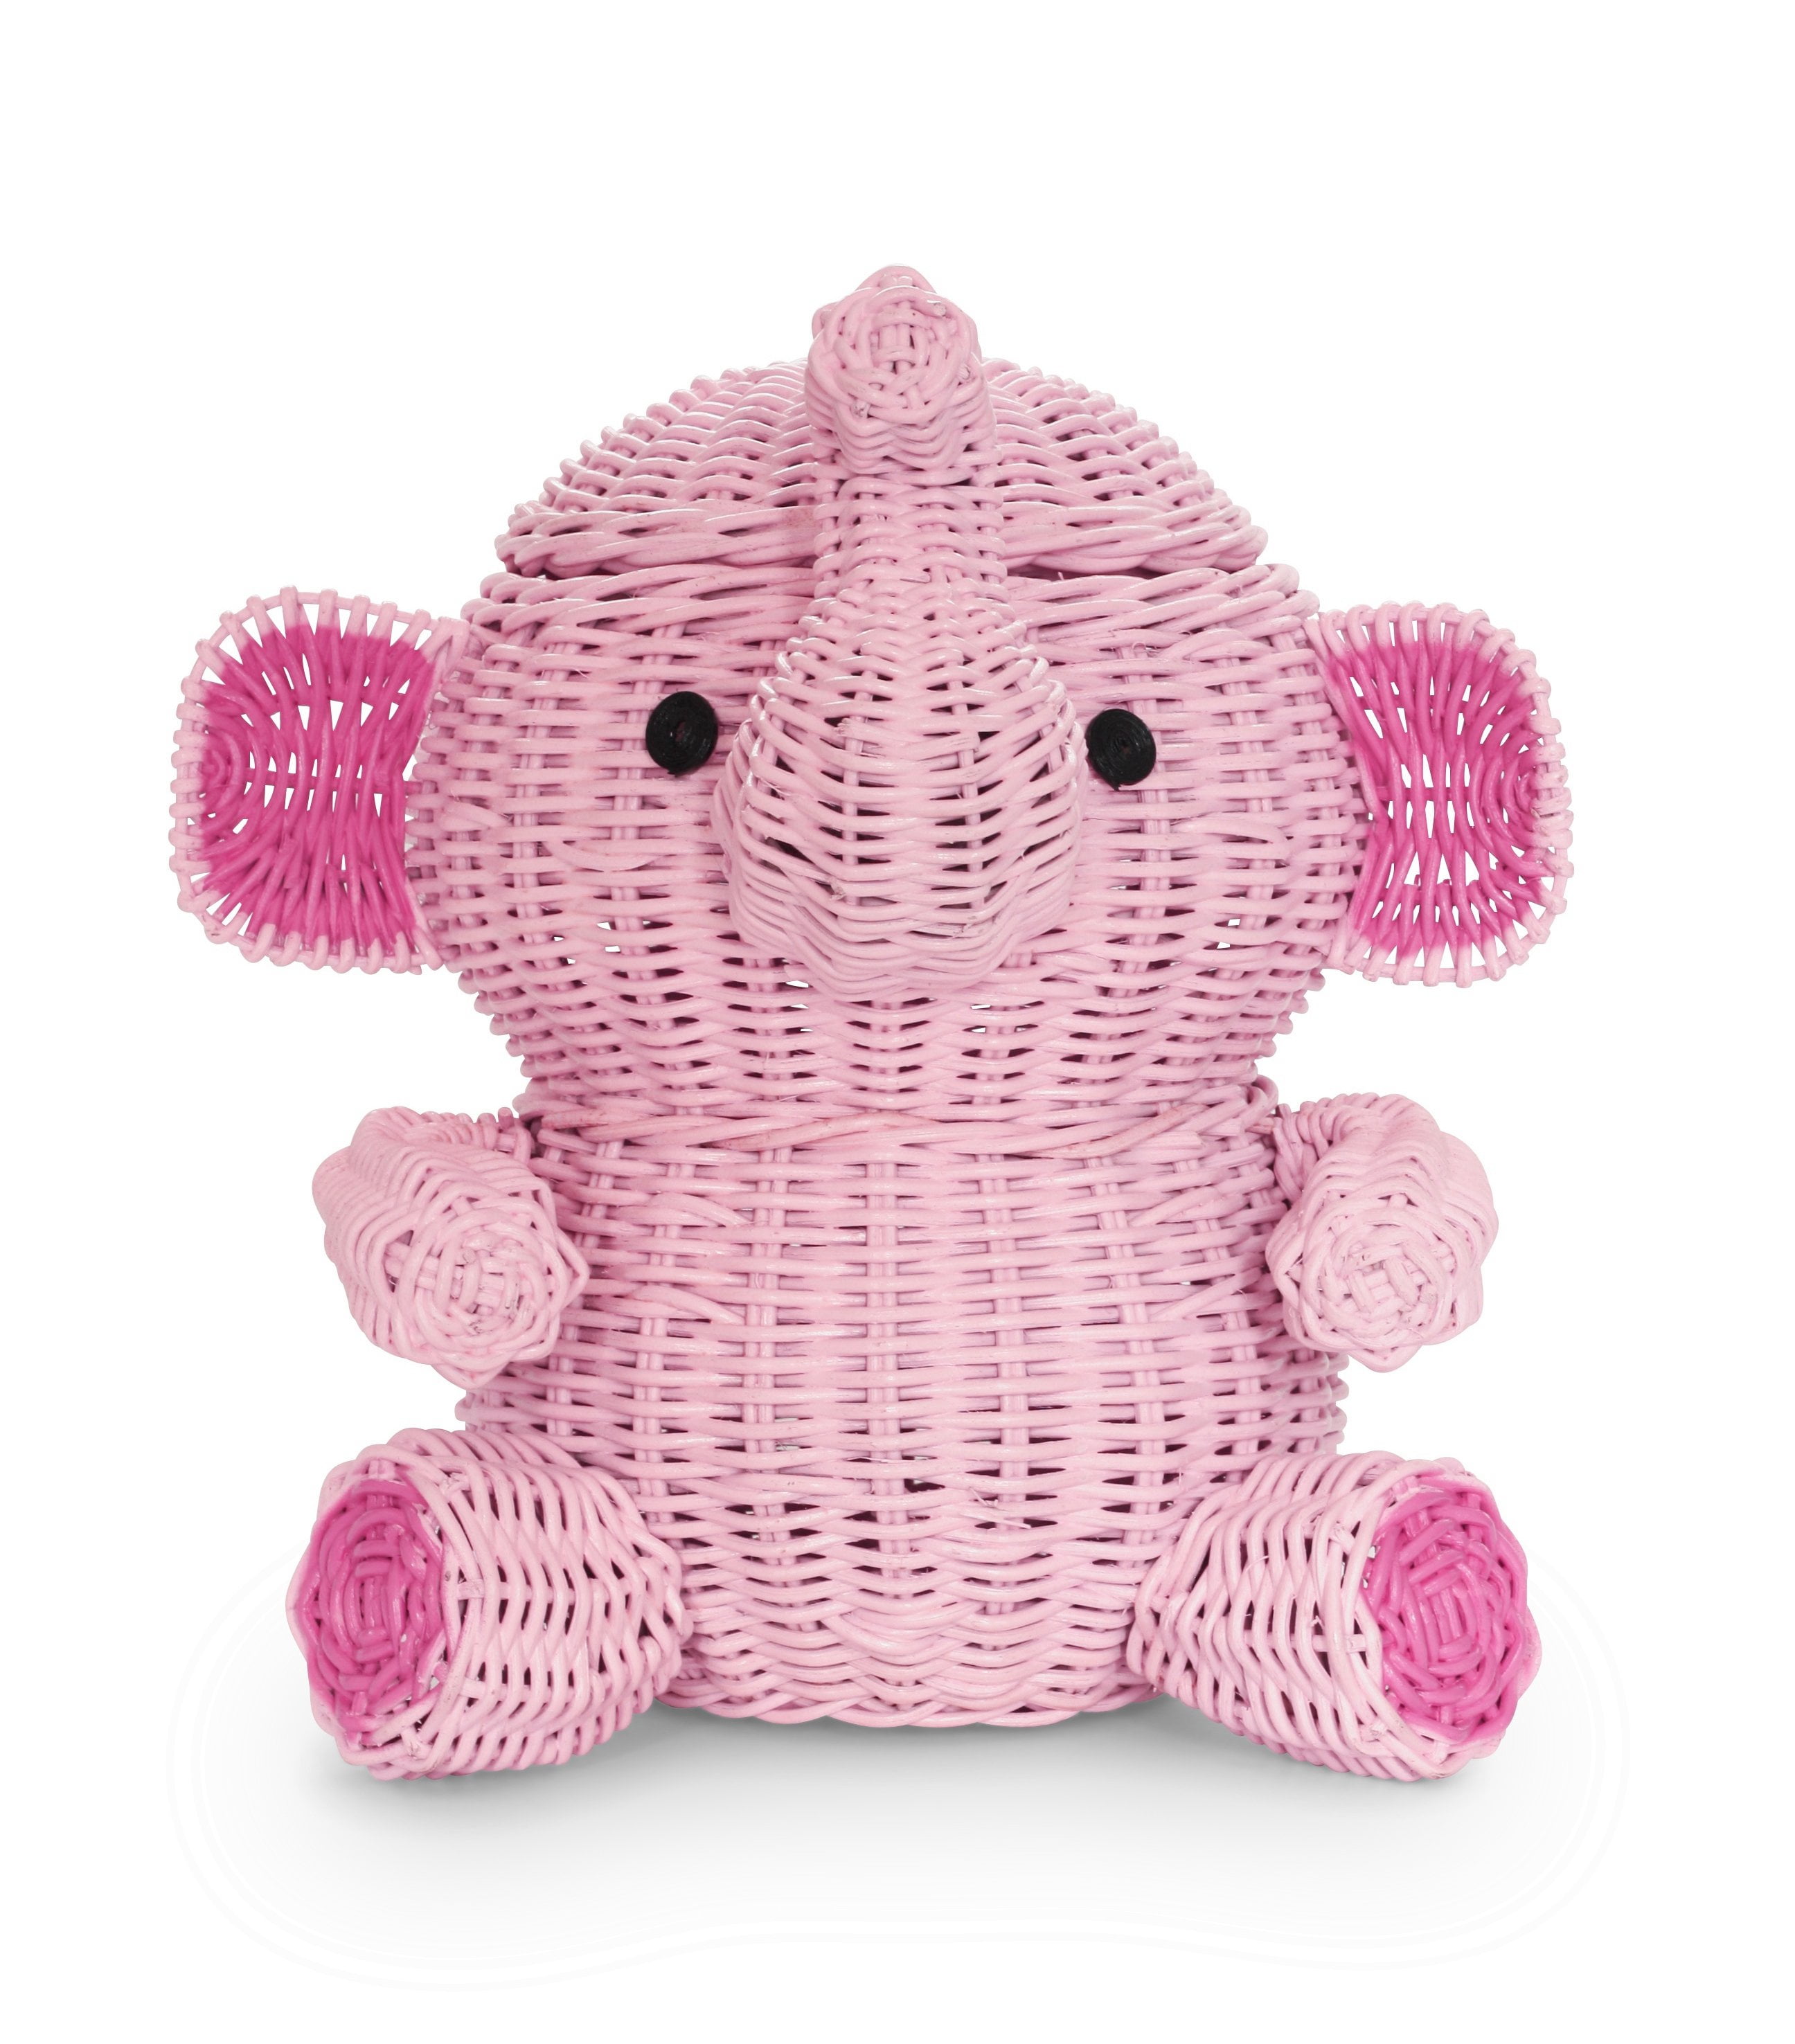 Small Pink Elephant Rattan Storage Basket Hand Woven Shelf Organizer Wicker Gift 